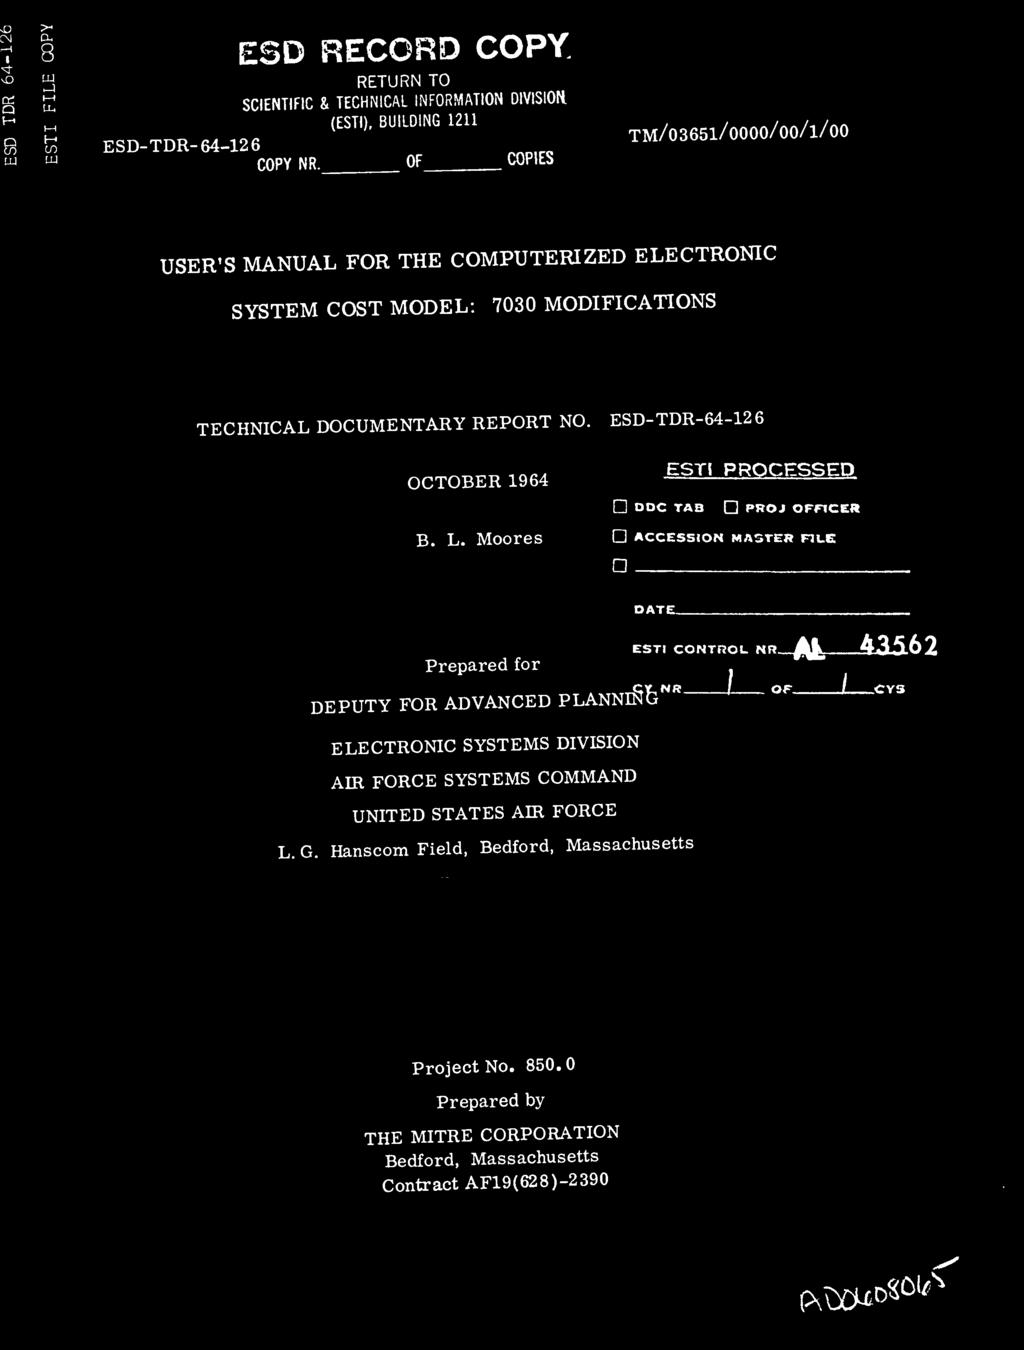 ESTt PROCESSED OCTOBER 1964 ^^ ^ DOC TAB PROJ OFFICE* B. L. Moores ACCESSION MASTER FILK DATE. Prepared for DEPUTY FOR ADVANCED PLANNING-" 1 ESTI CONTROL»"» j^ fljlj.62.